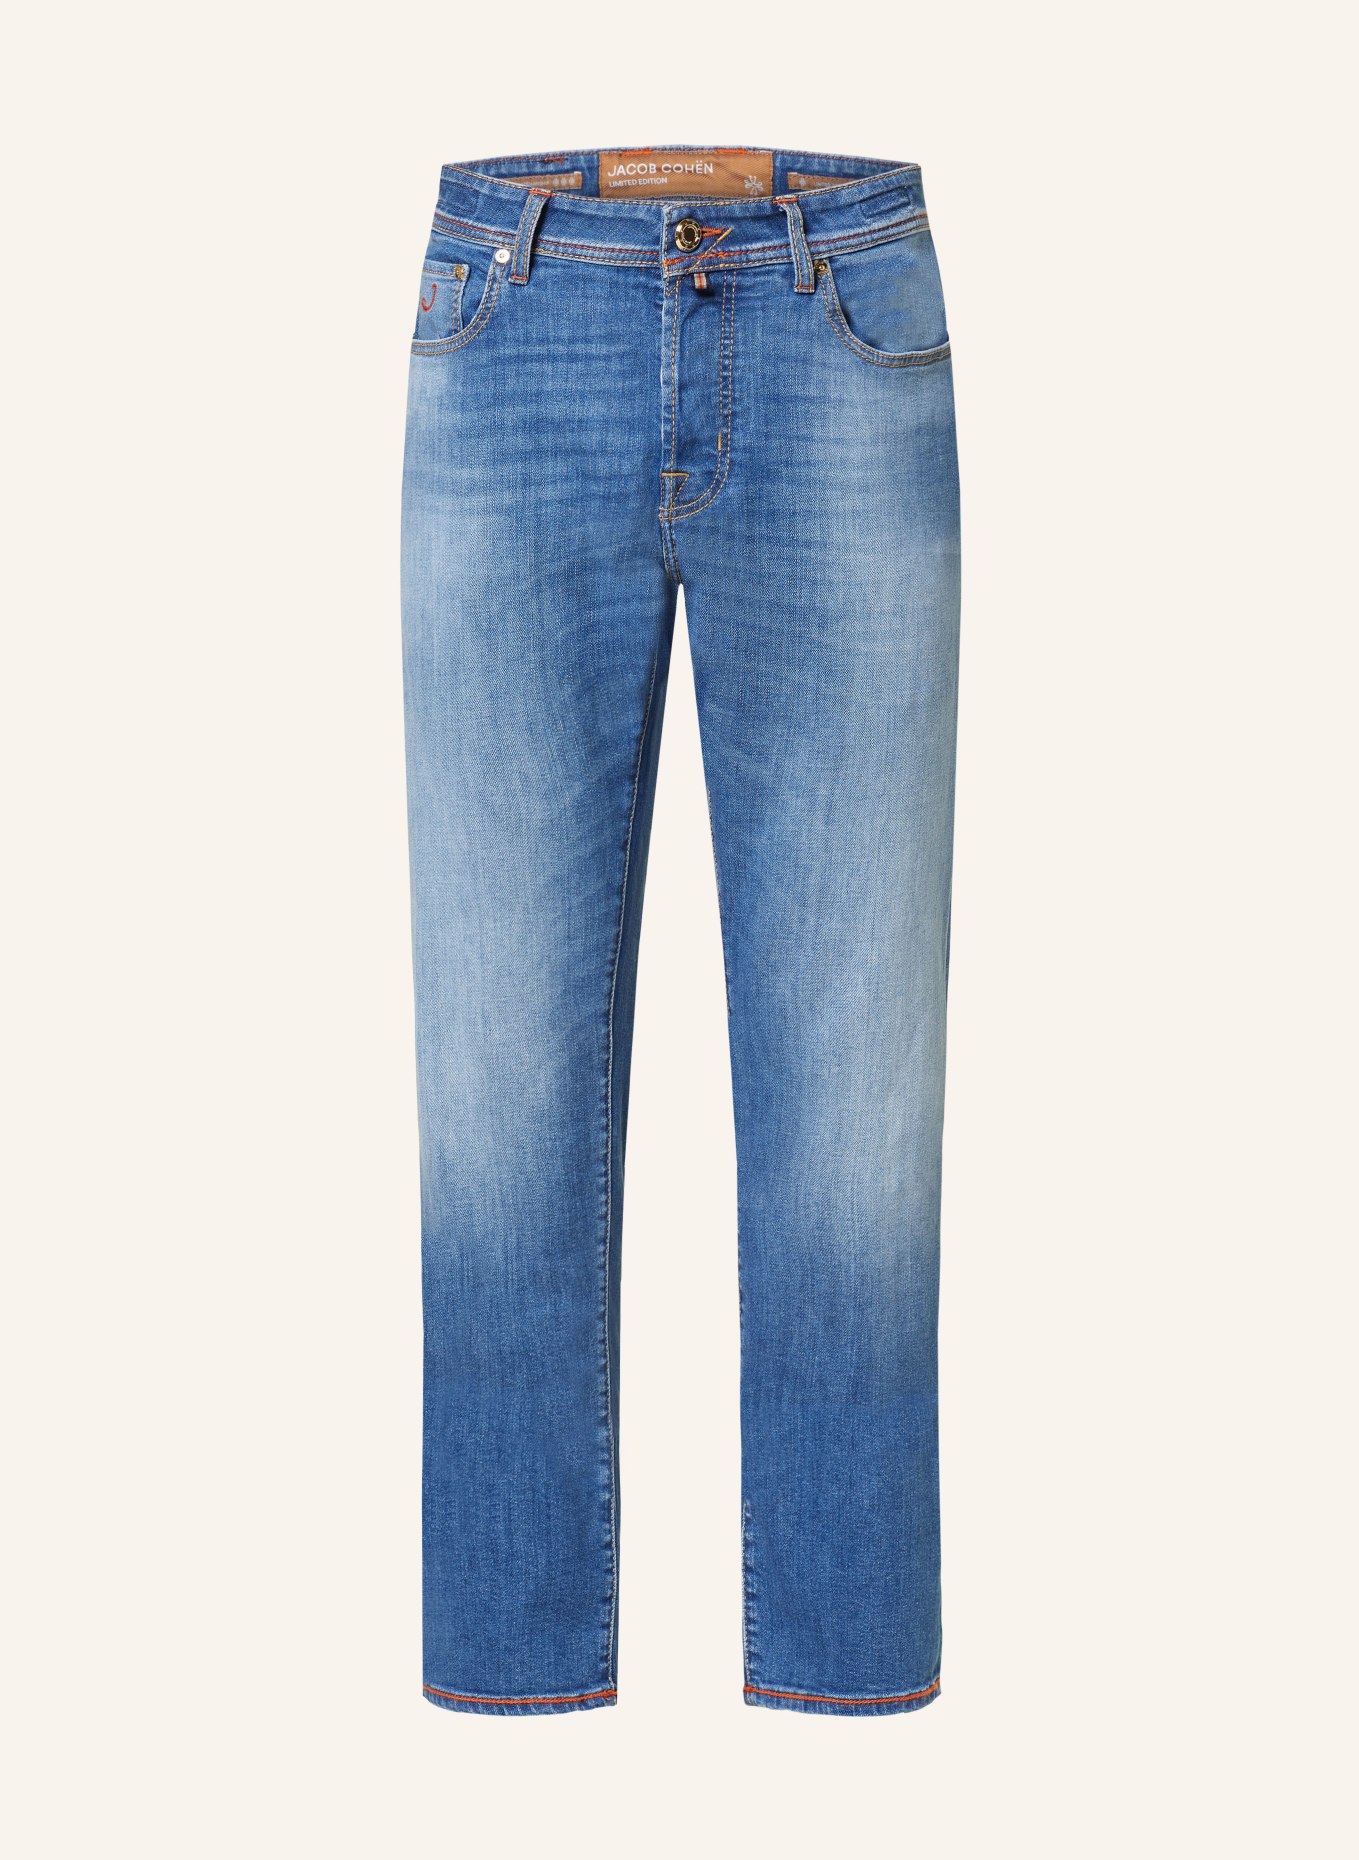 JACOB COHEN Jeans BARD Slim Fit, Farbe: 737D Light Blue (Bild 1)